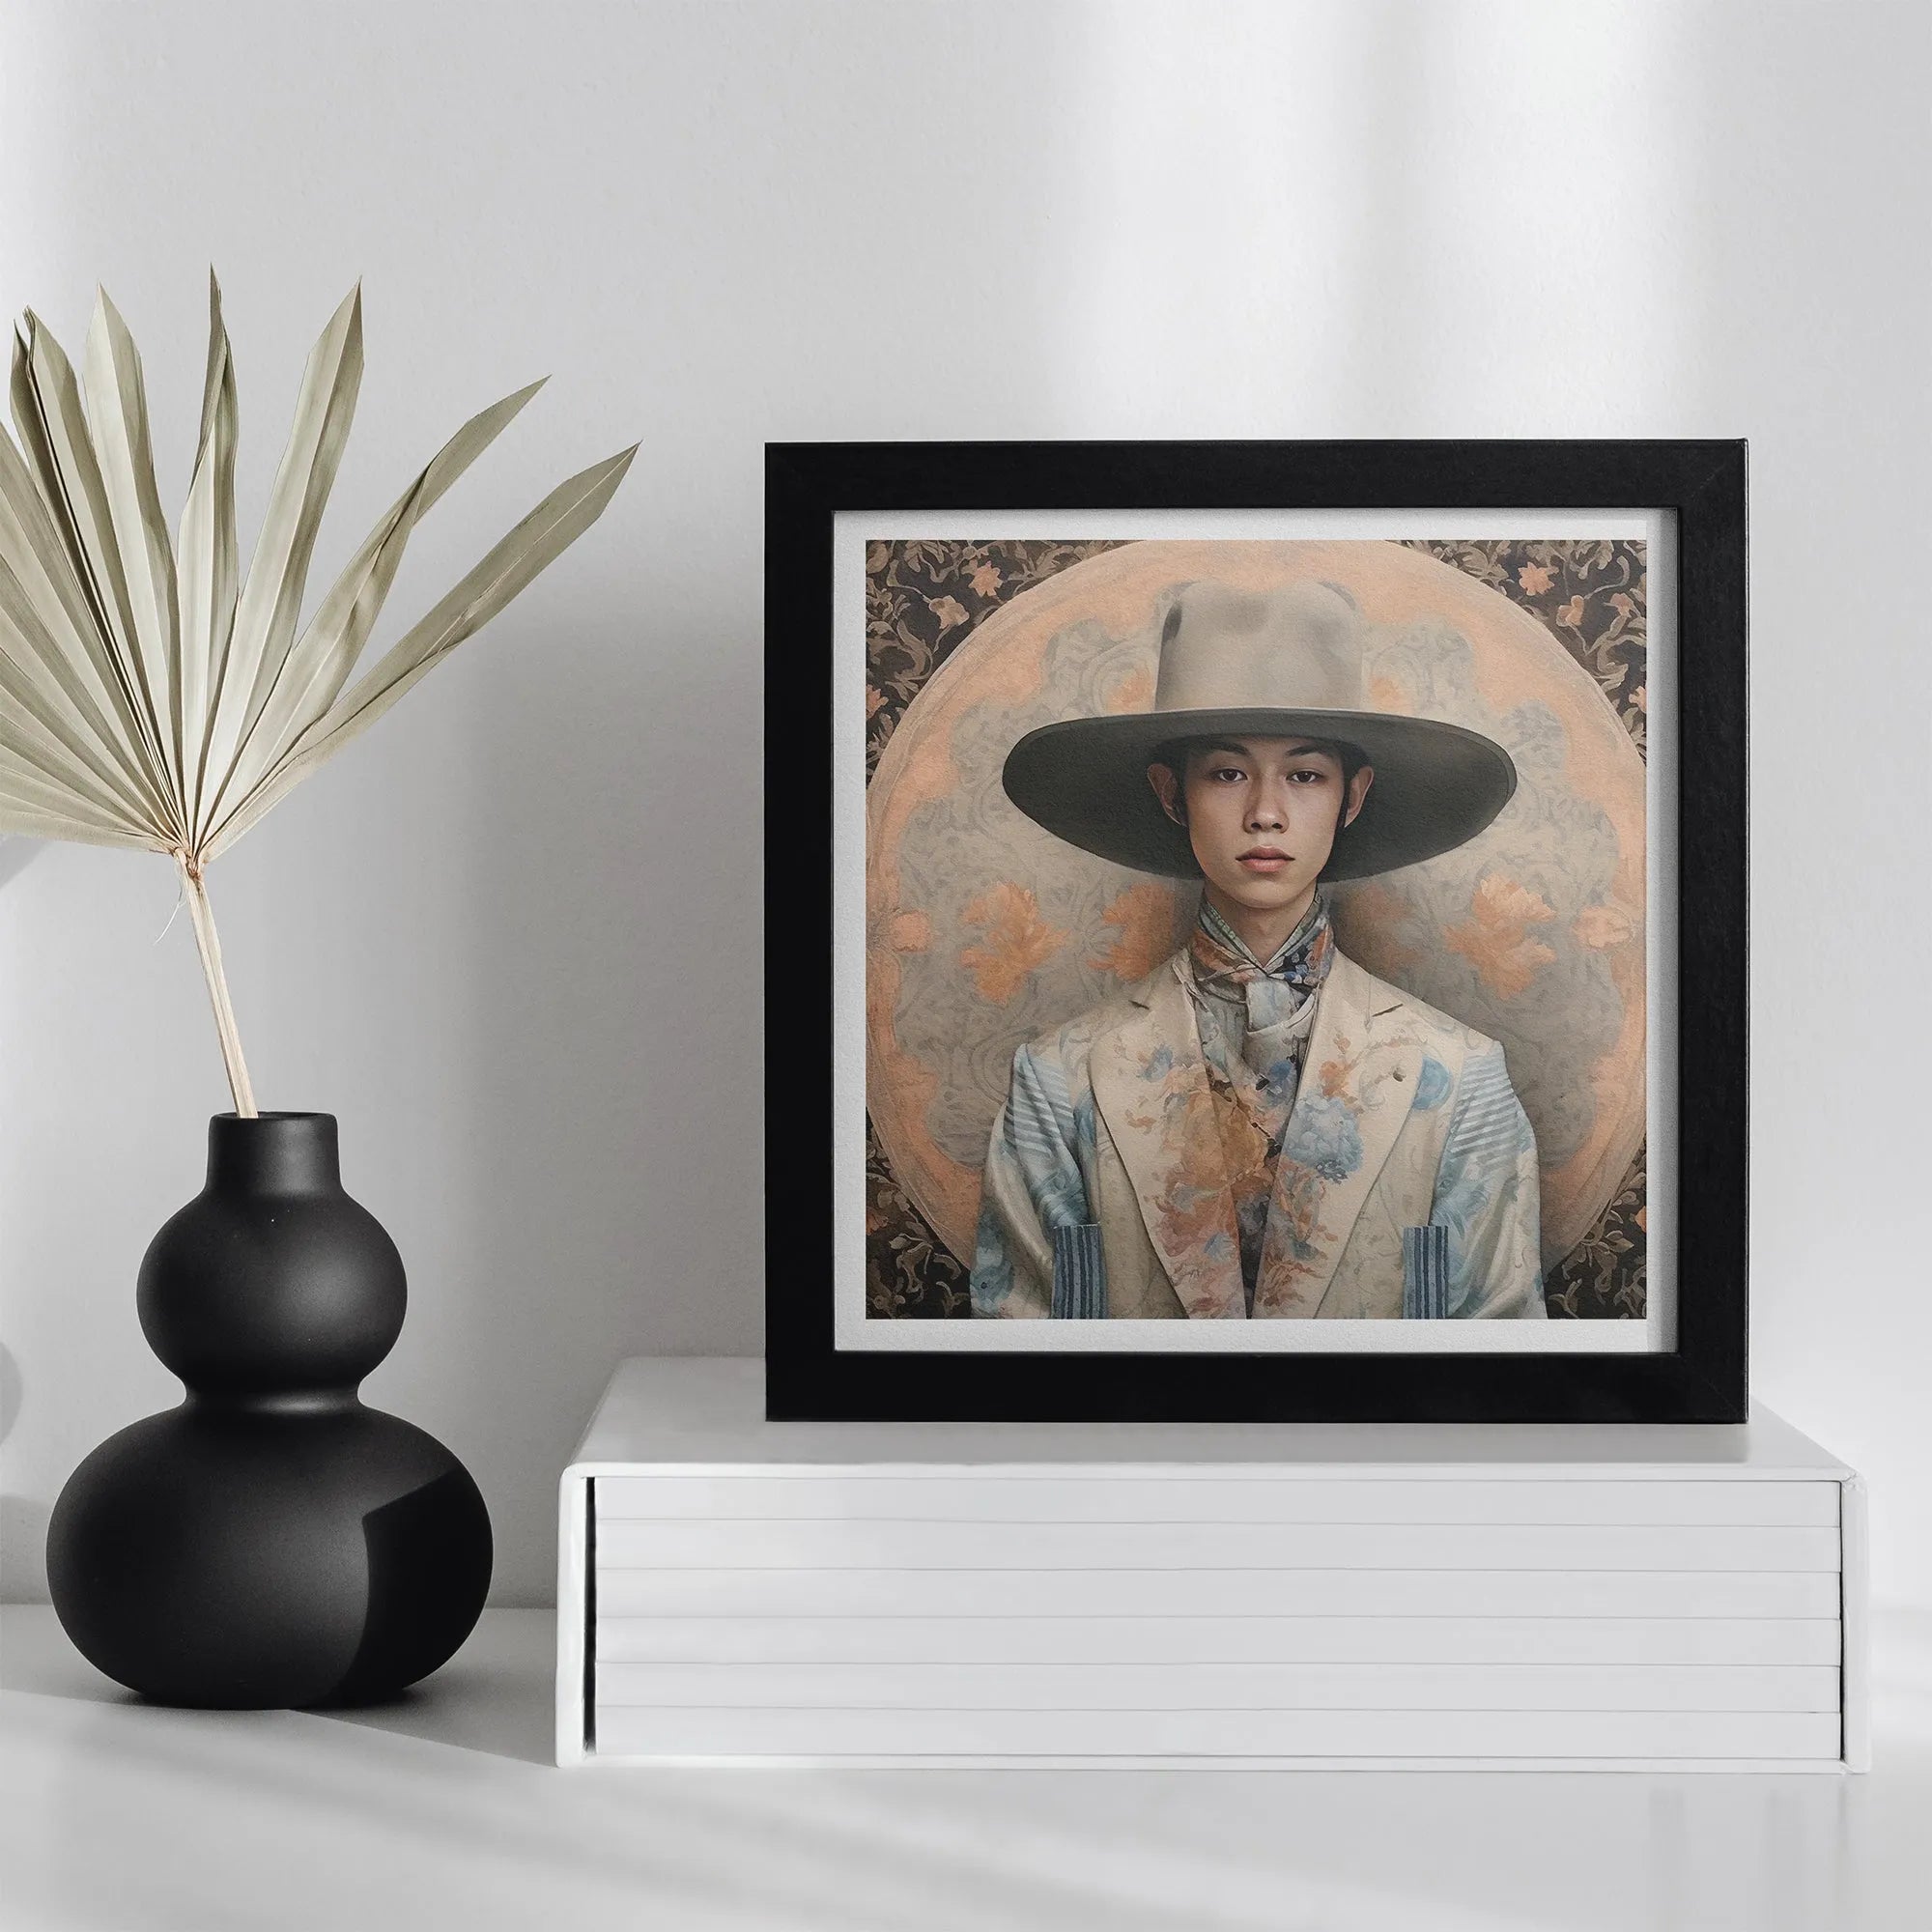 Thuanthong The Transgender Cowboy - Dandy Thai F2m Art Print - 16’x16’ - Posters Prints & Visual Artwork - Aesthetic Art